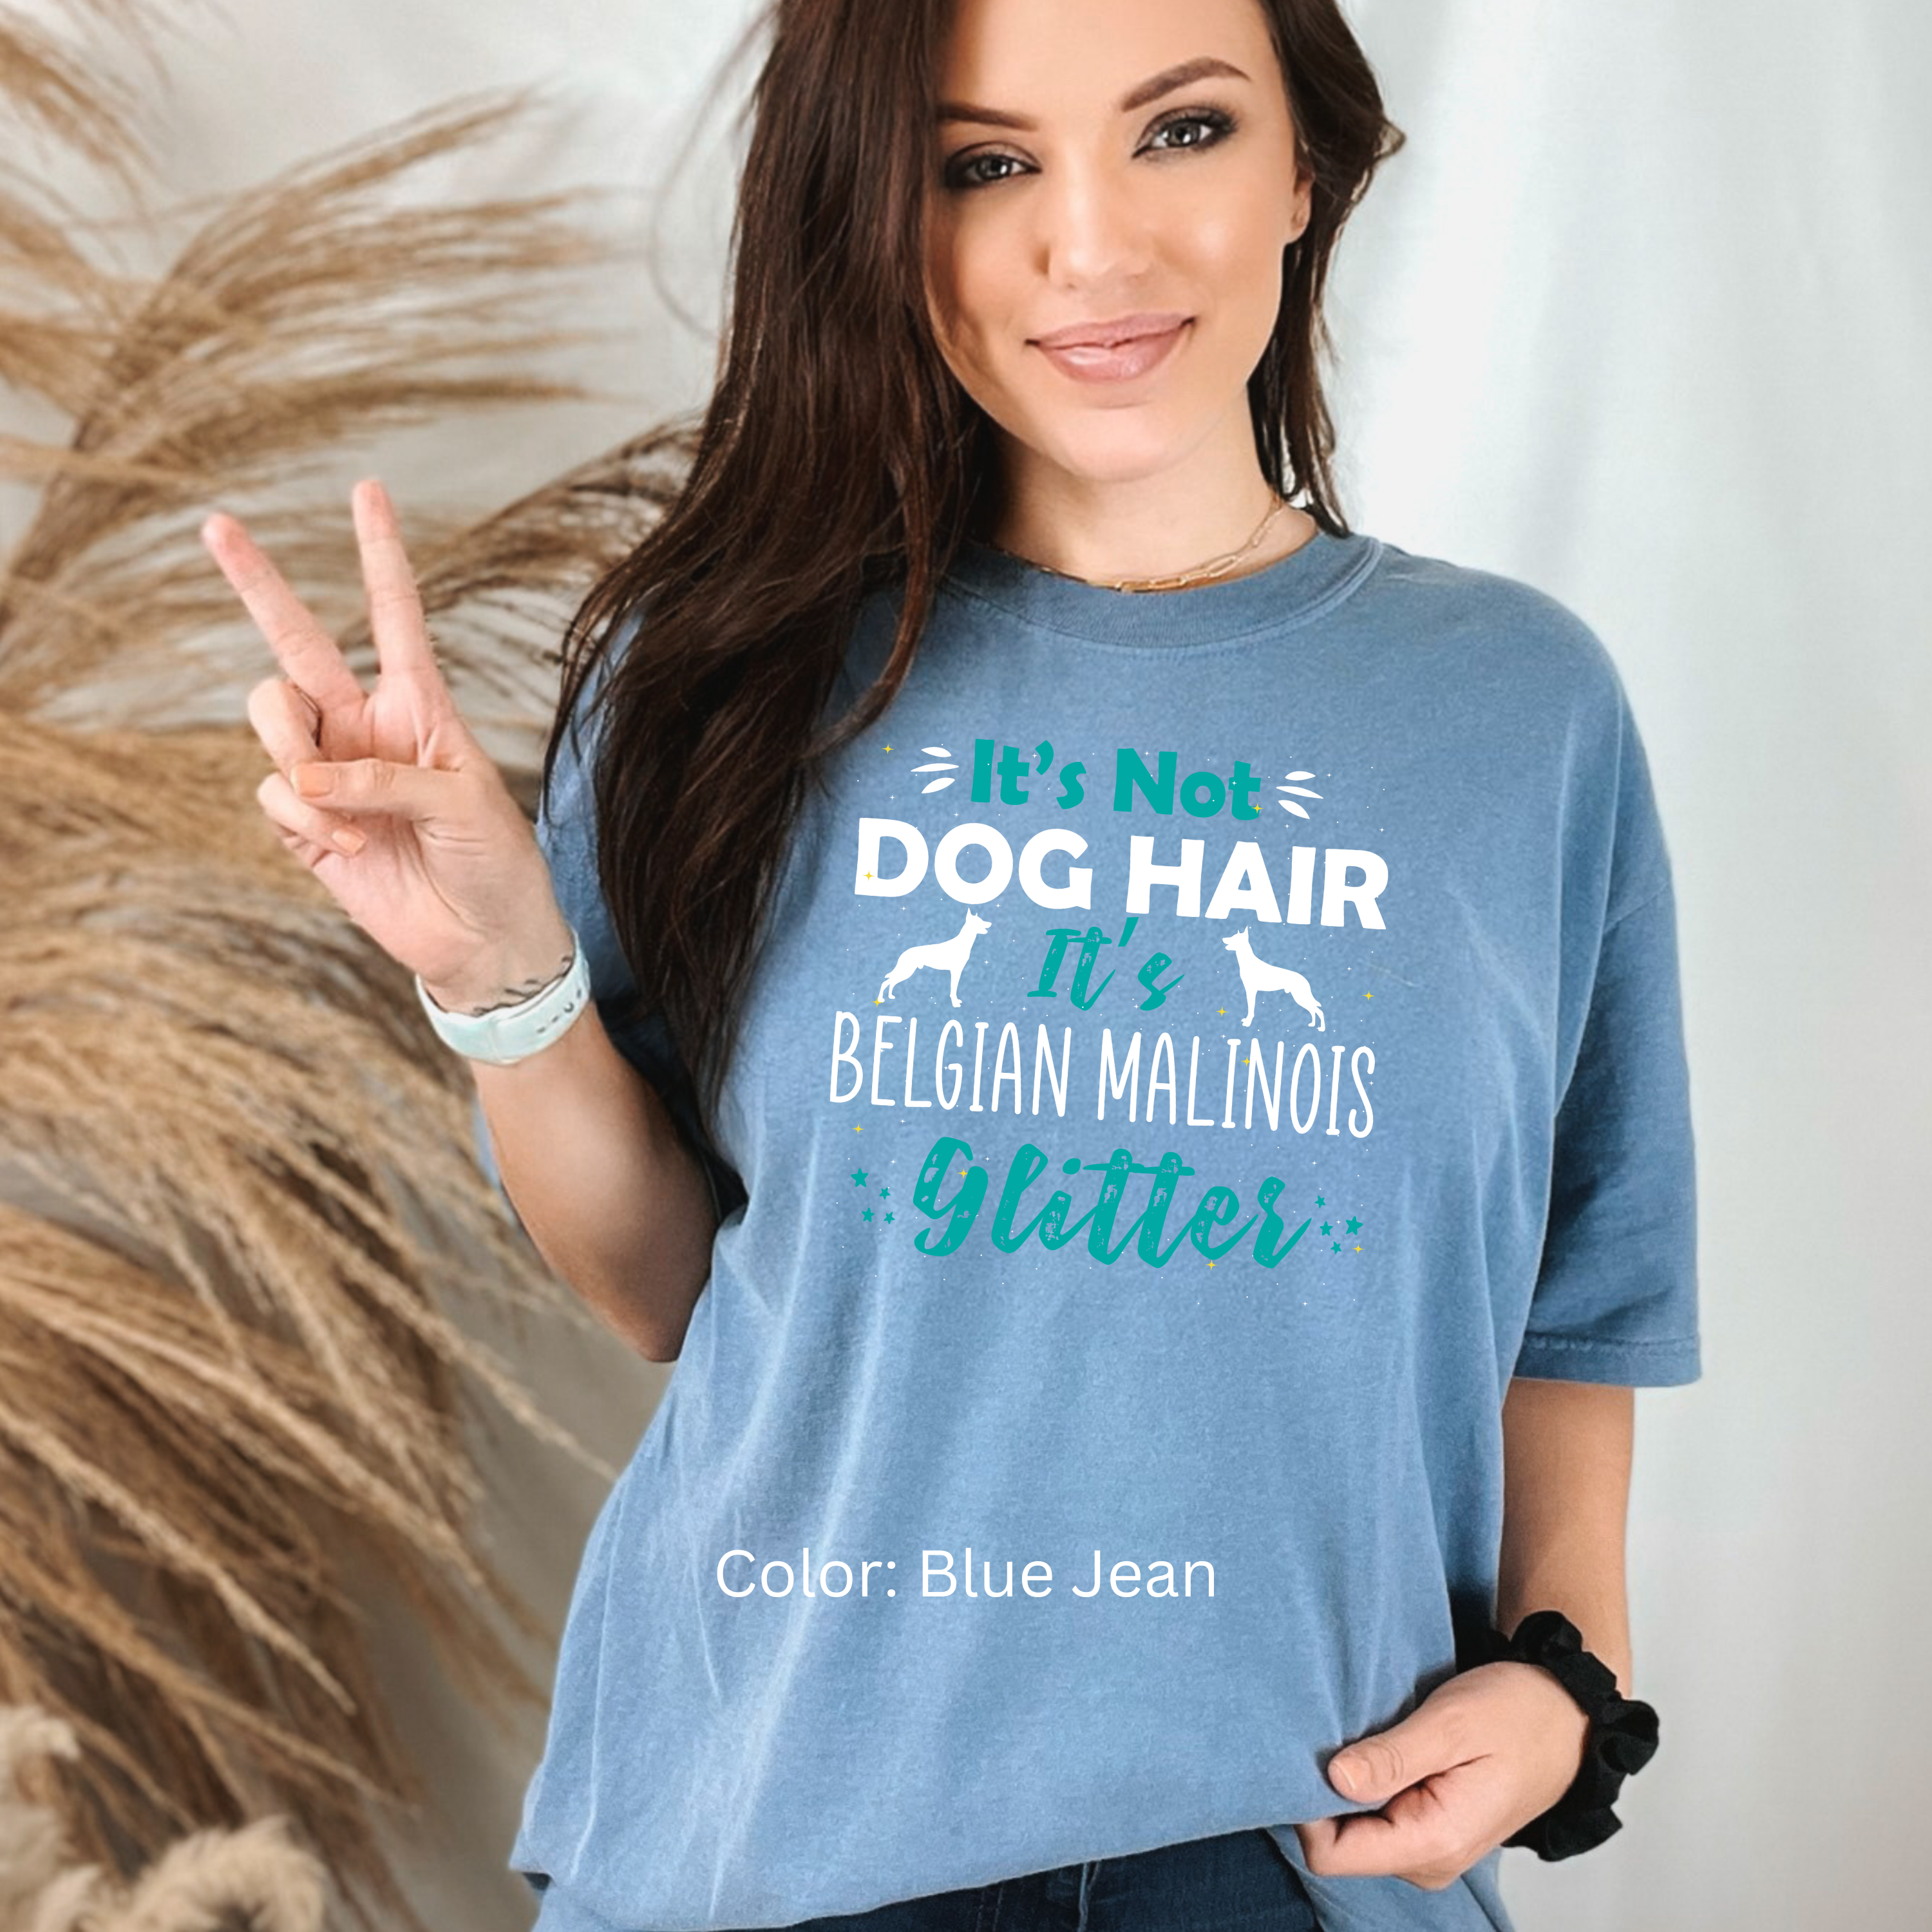 It's Not Dog Hair, It's Belgian Malinois Glitter Comfort Colors T-shirt - Dog Lover Tee